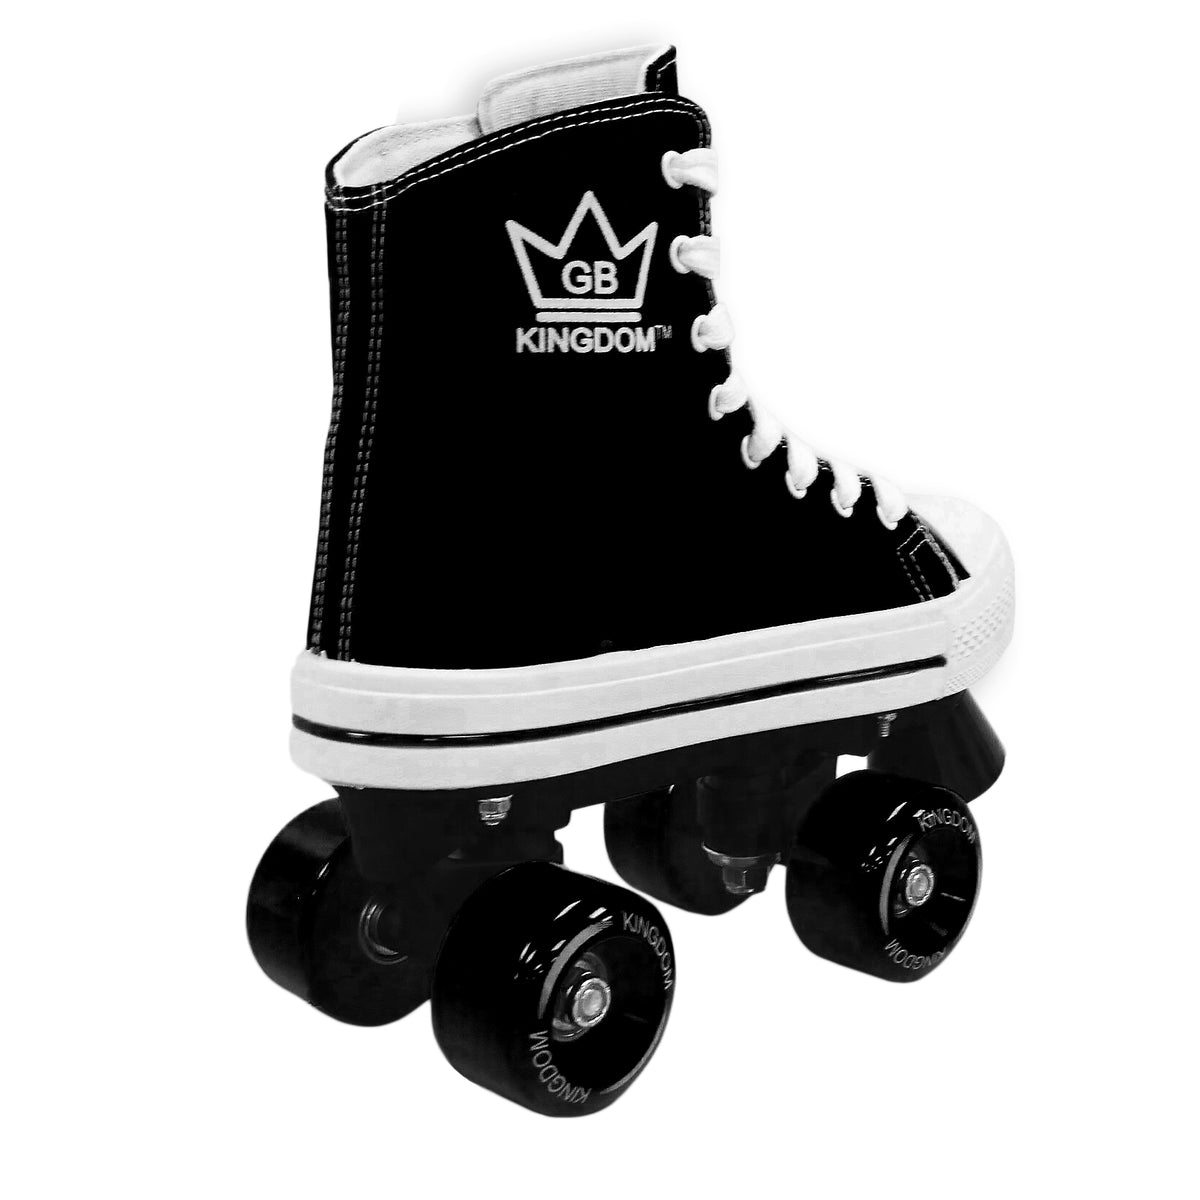 Kingdom GB HI-PE Canvas Quad Roller Skates Black